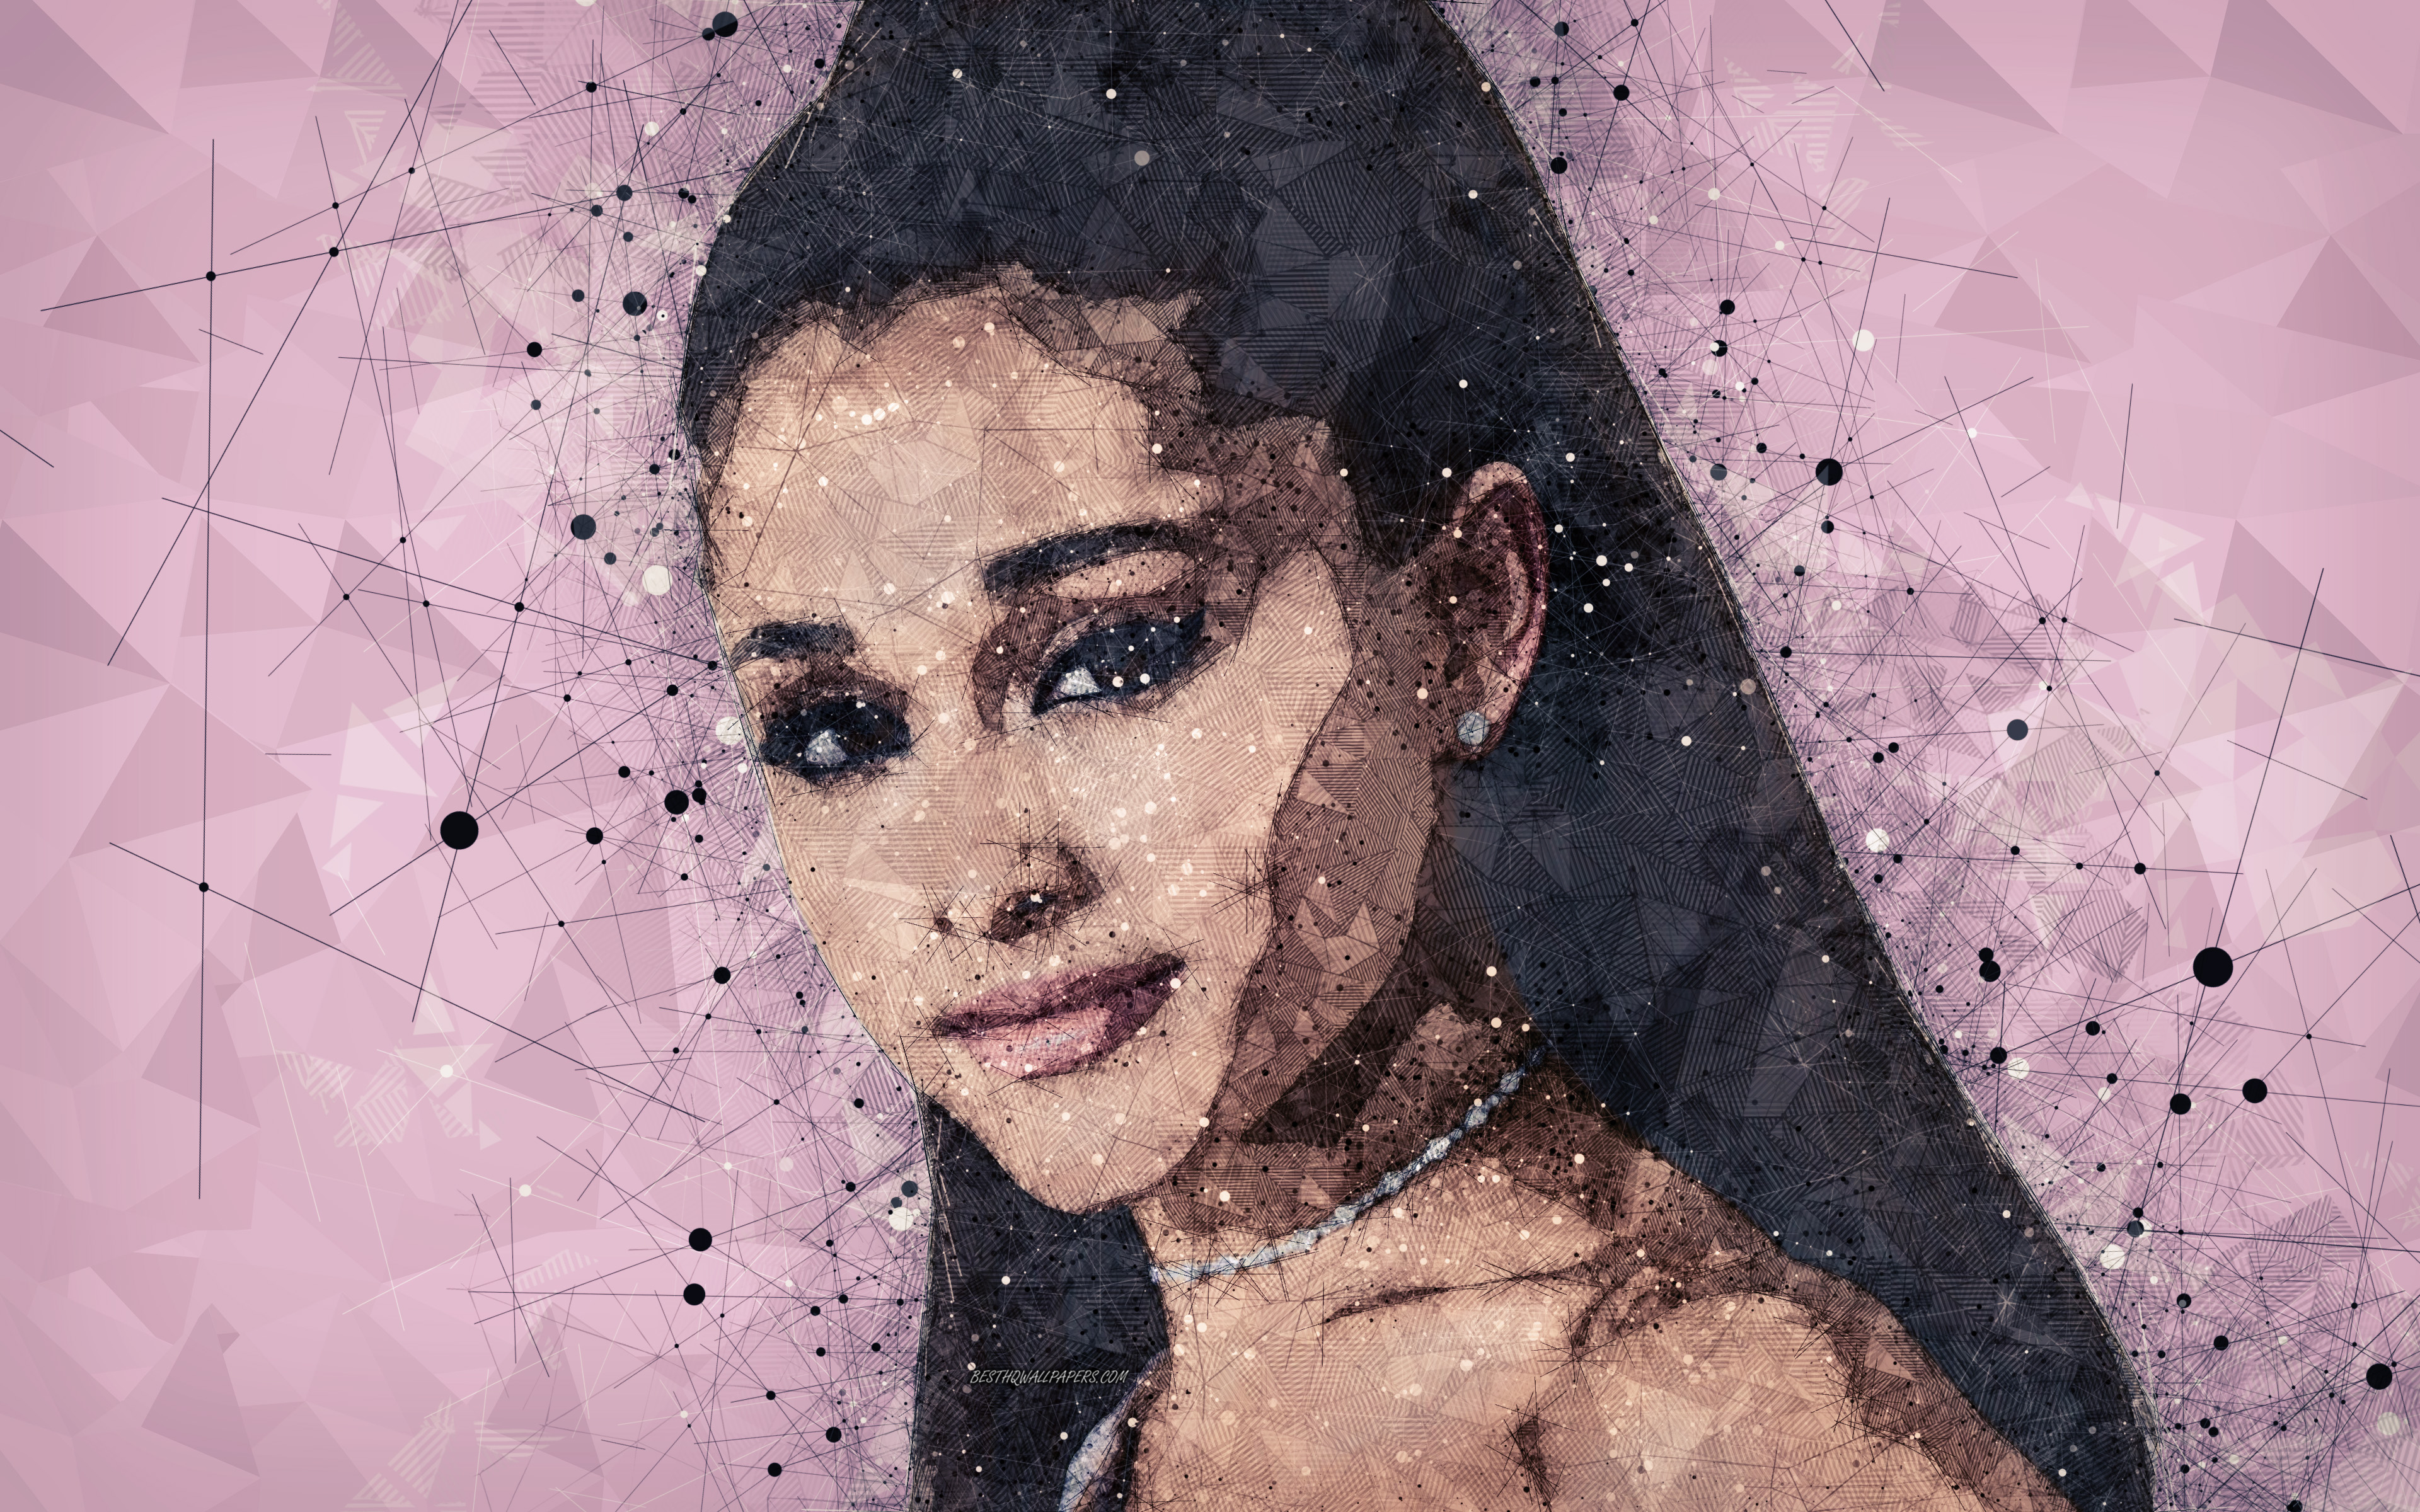 Ariana Grande Portrait 2018 Wallpapers